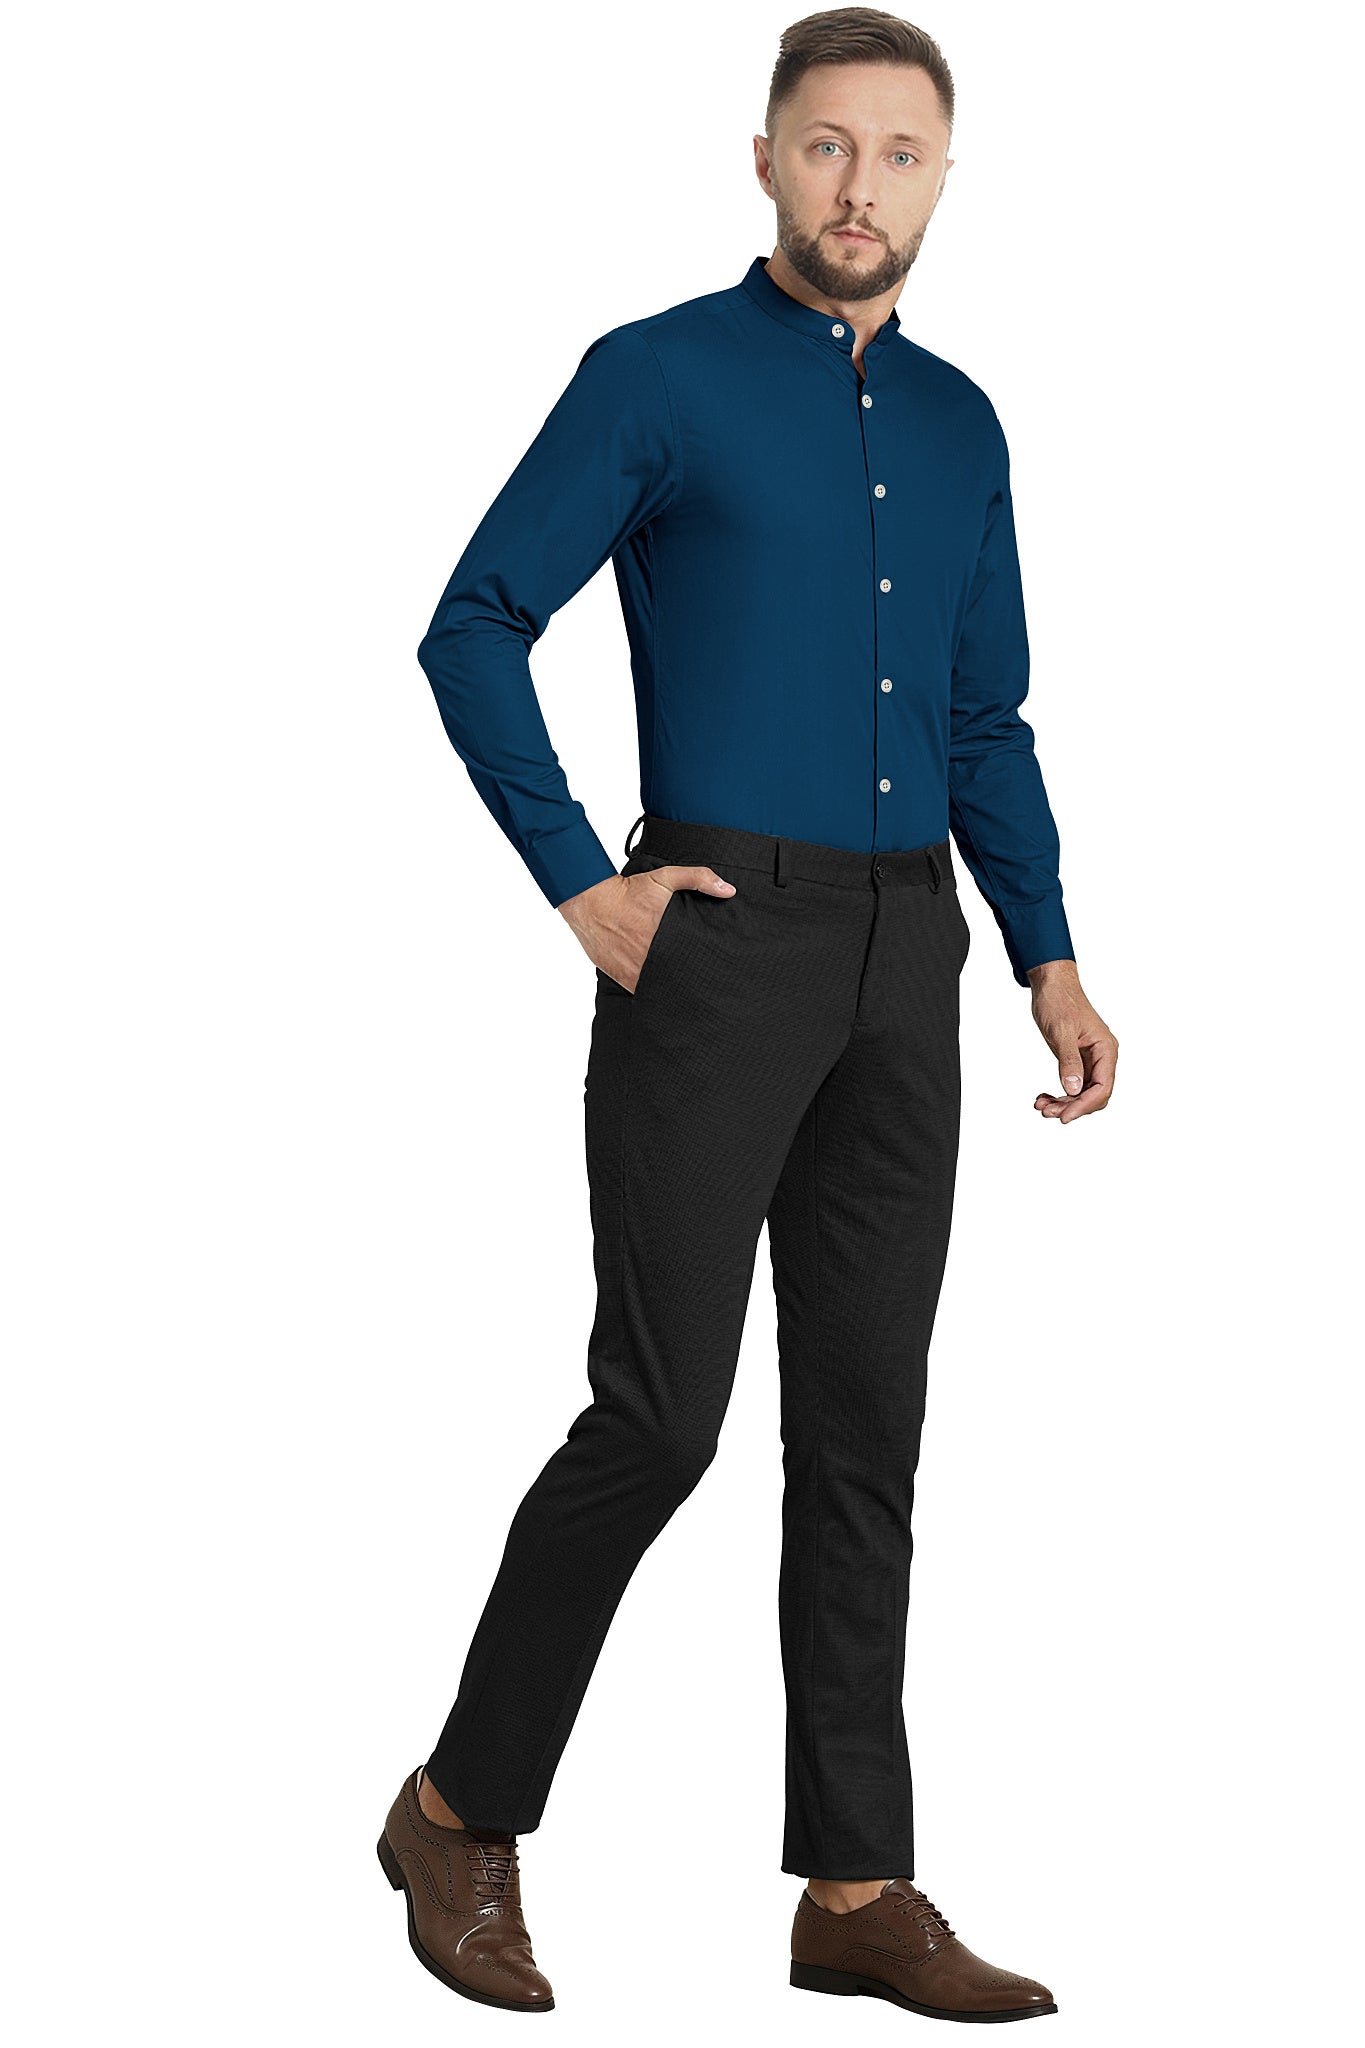 Attractive Girl Trousers Dark Blue Shirt Stock Photo 45054187 | Shutterstock